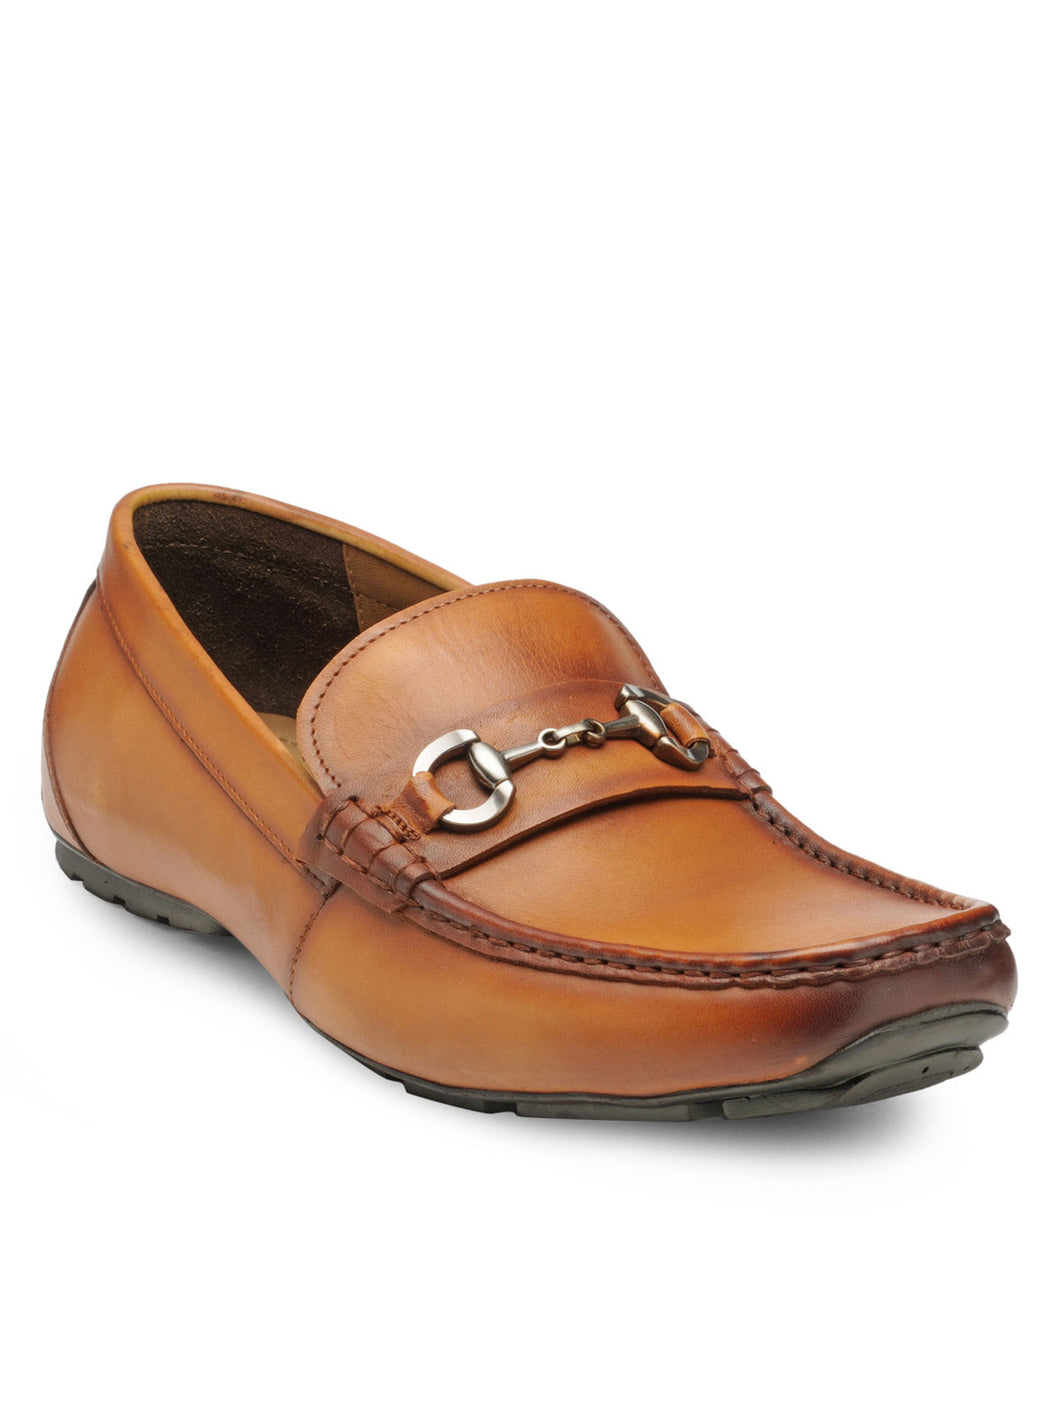 Teakwood Leather Men's Tan Slip-ons Shoes